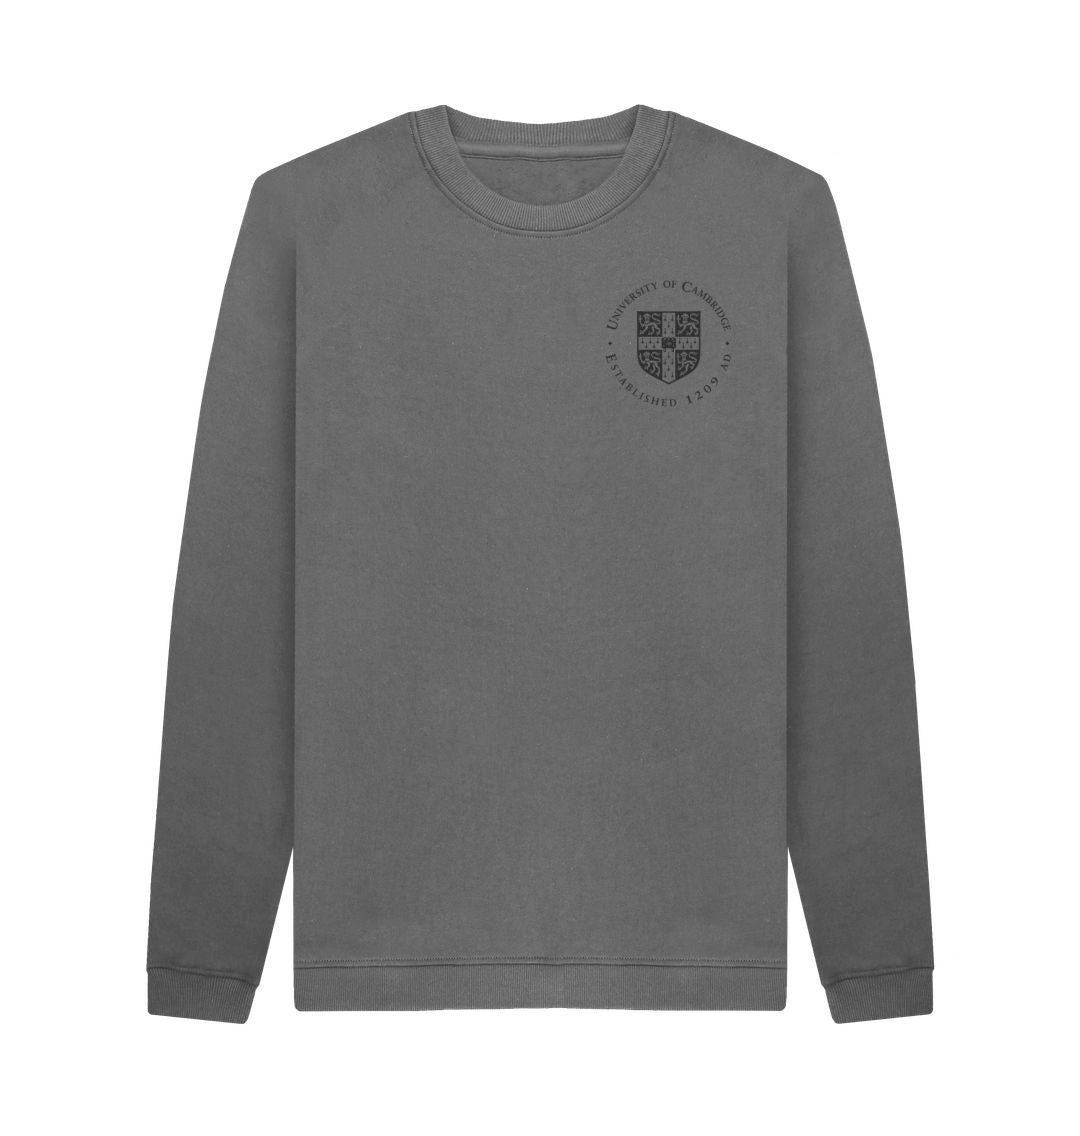 Slate Grey Men's University of Cambridge Crew Neck Sweater, Small Shield